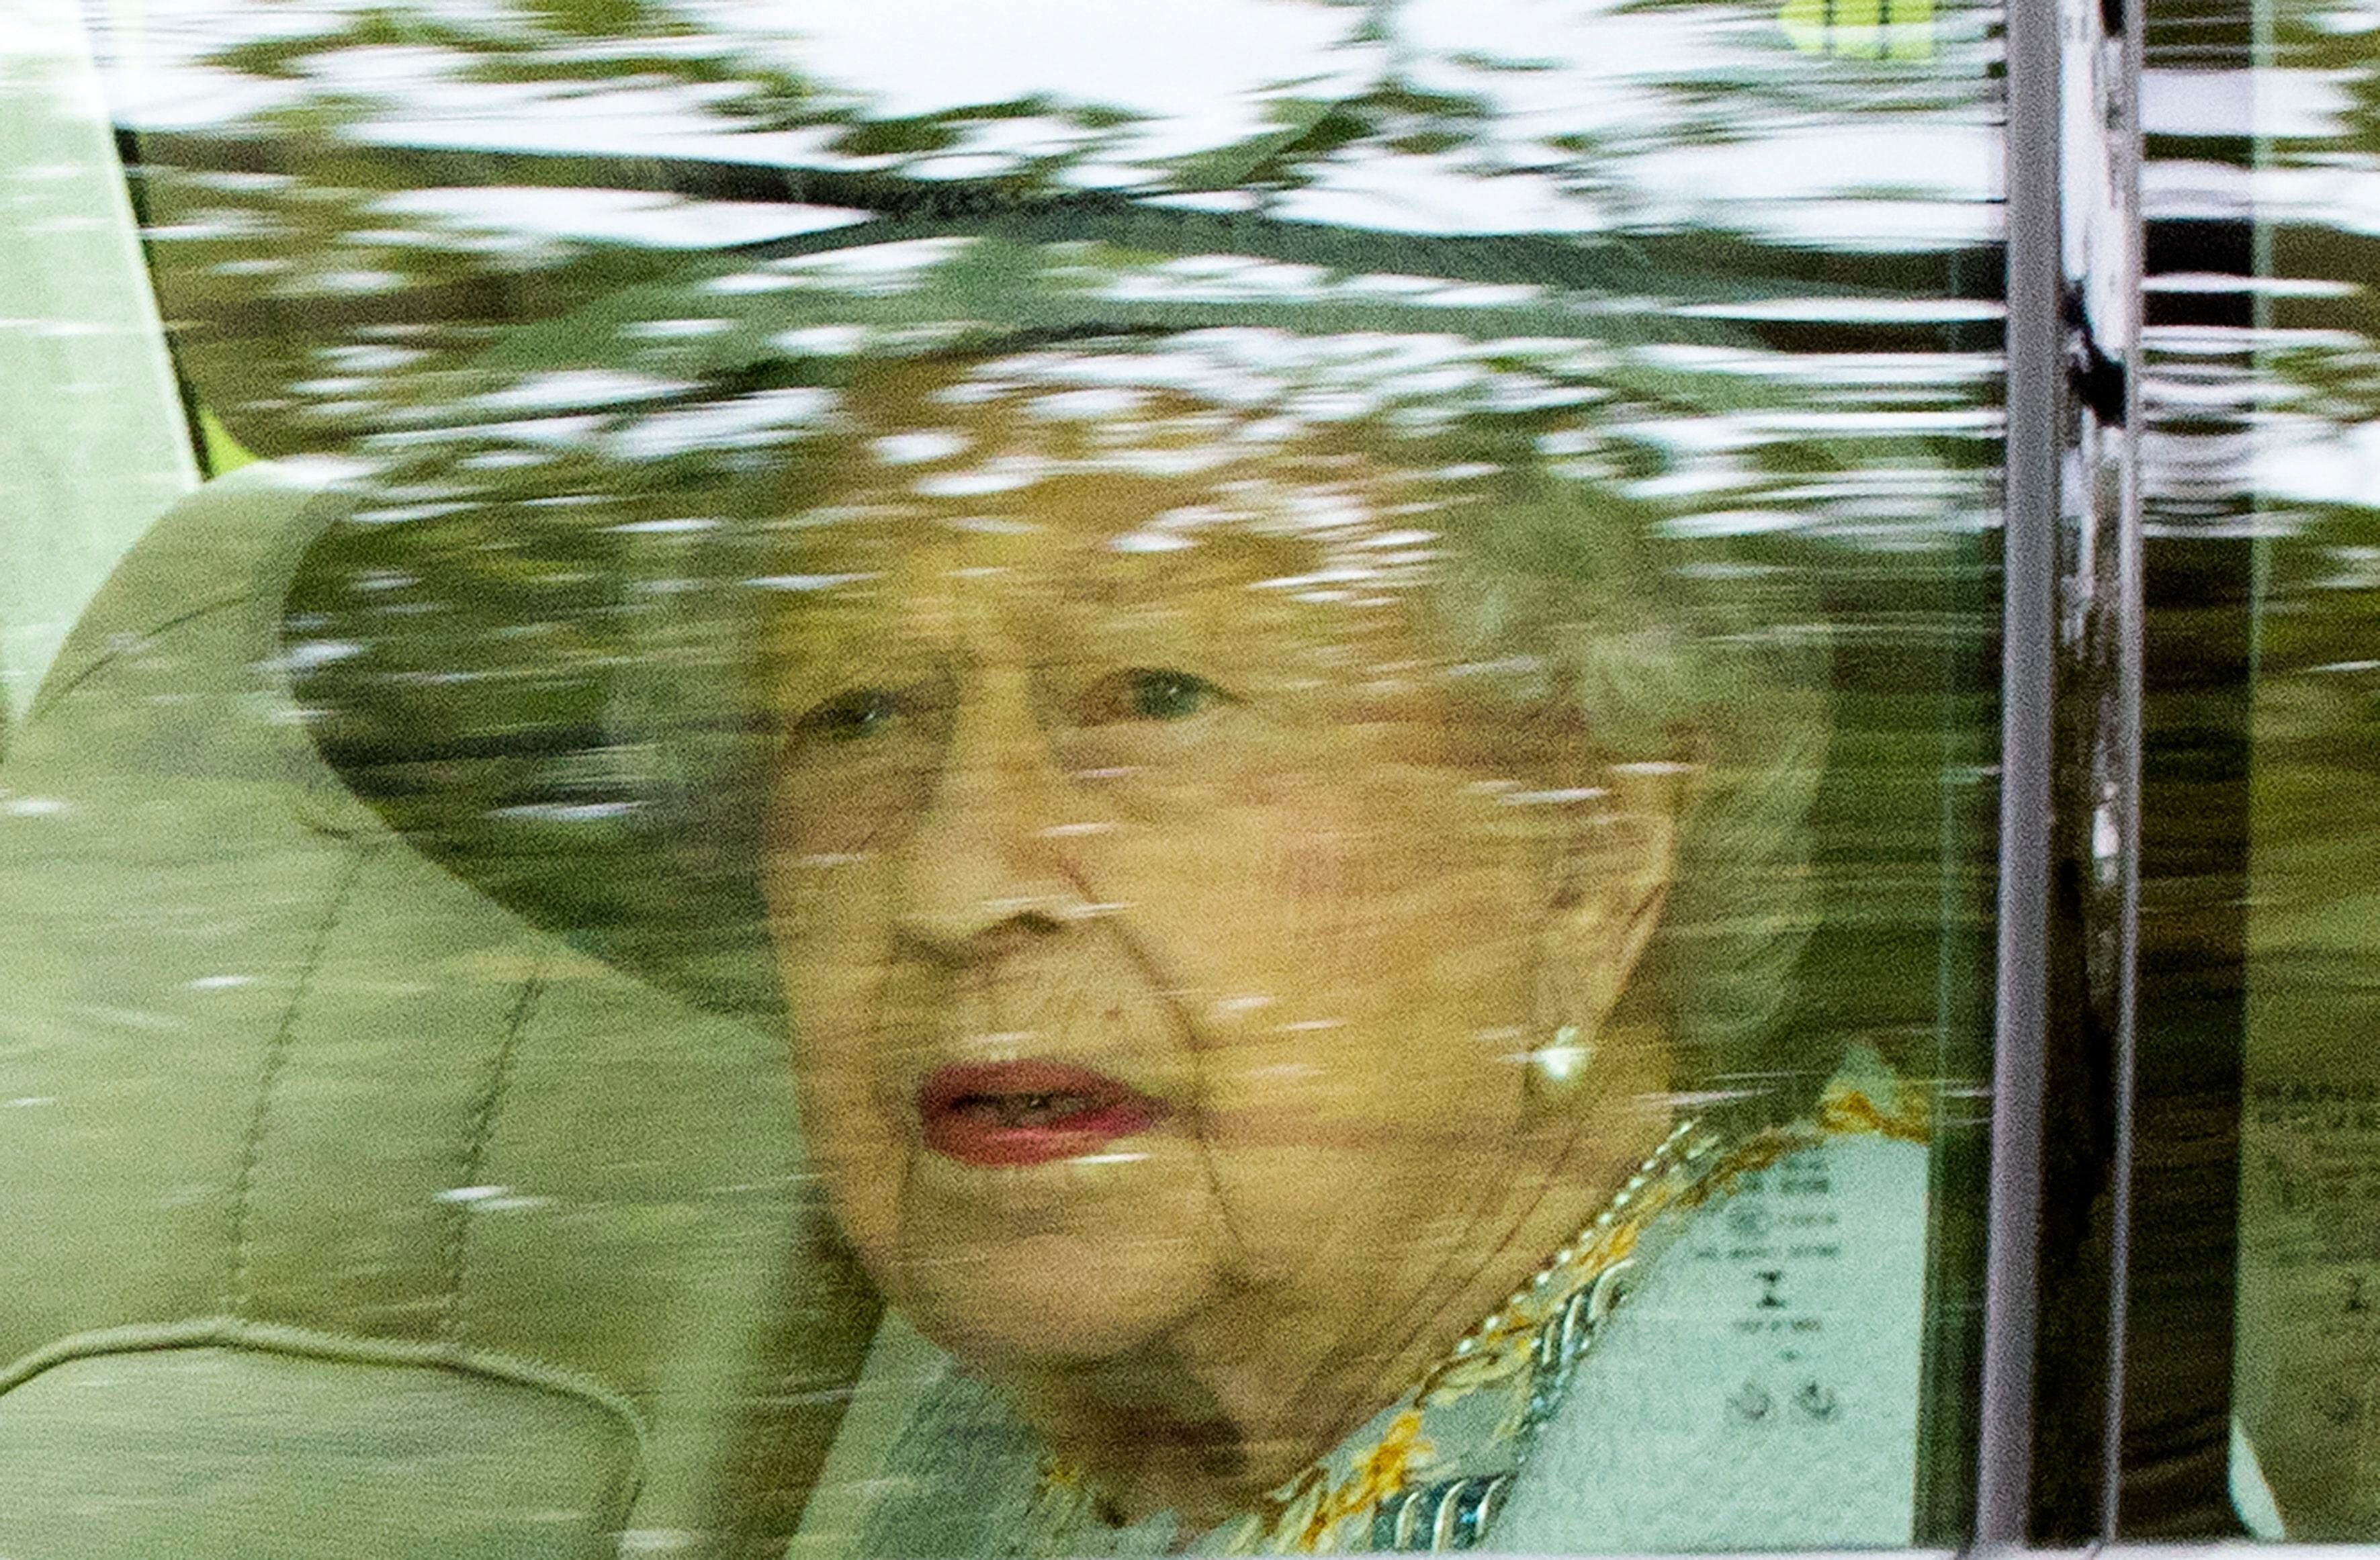 La reina Isabel II, en una imagen de archivo. EFE/EPA/FACUNDO ARRIZABALAGA